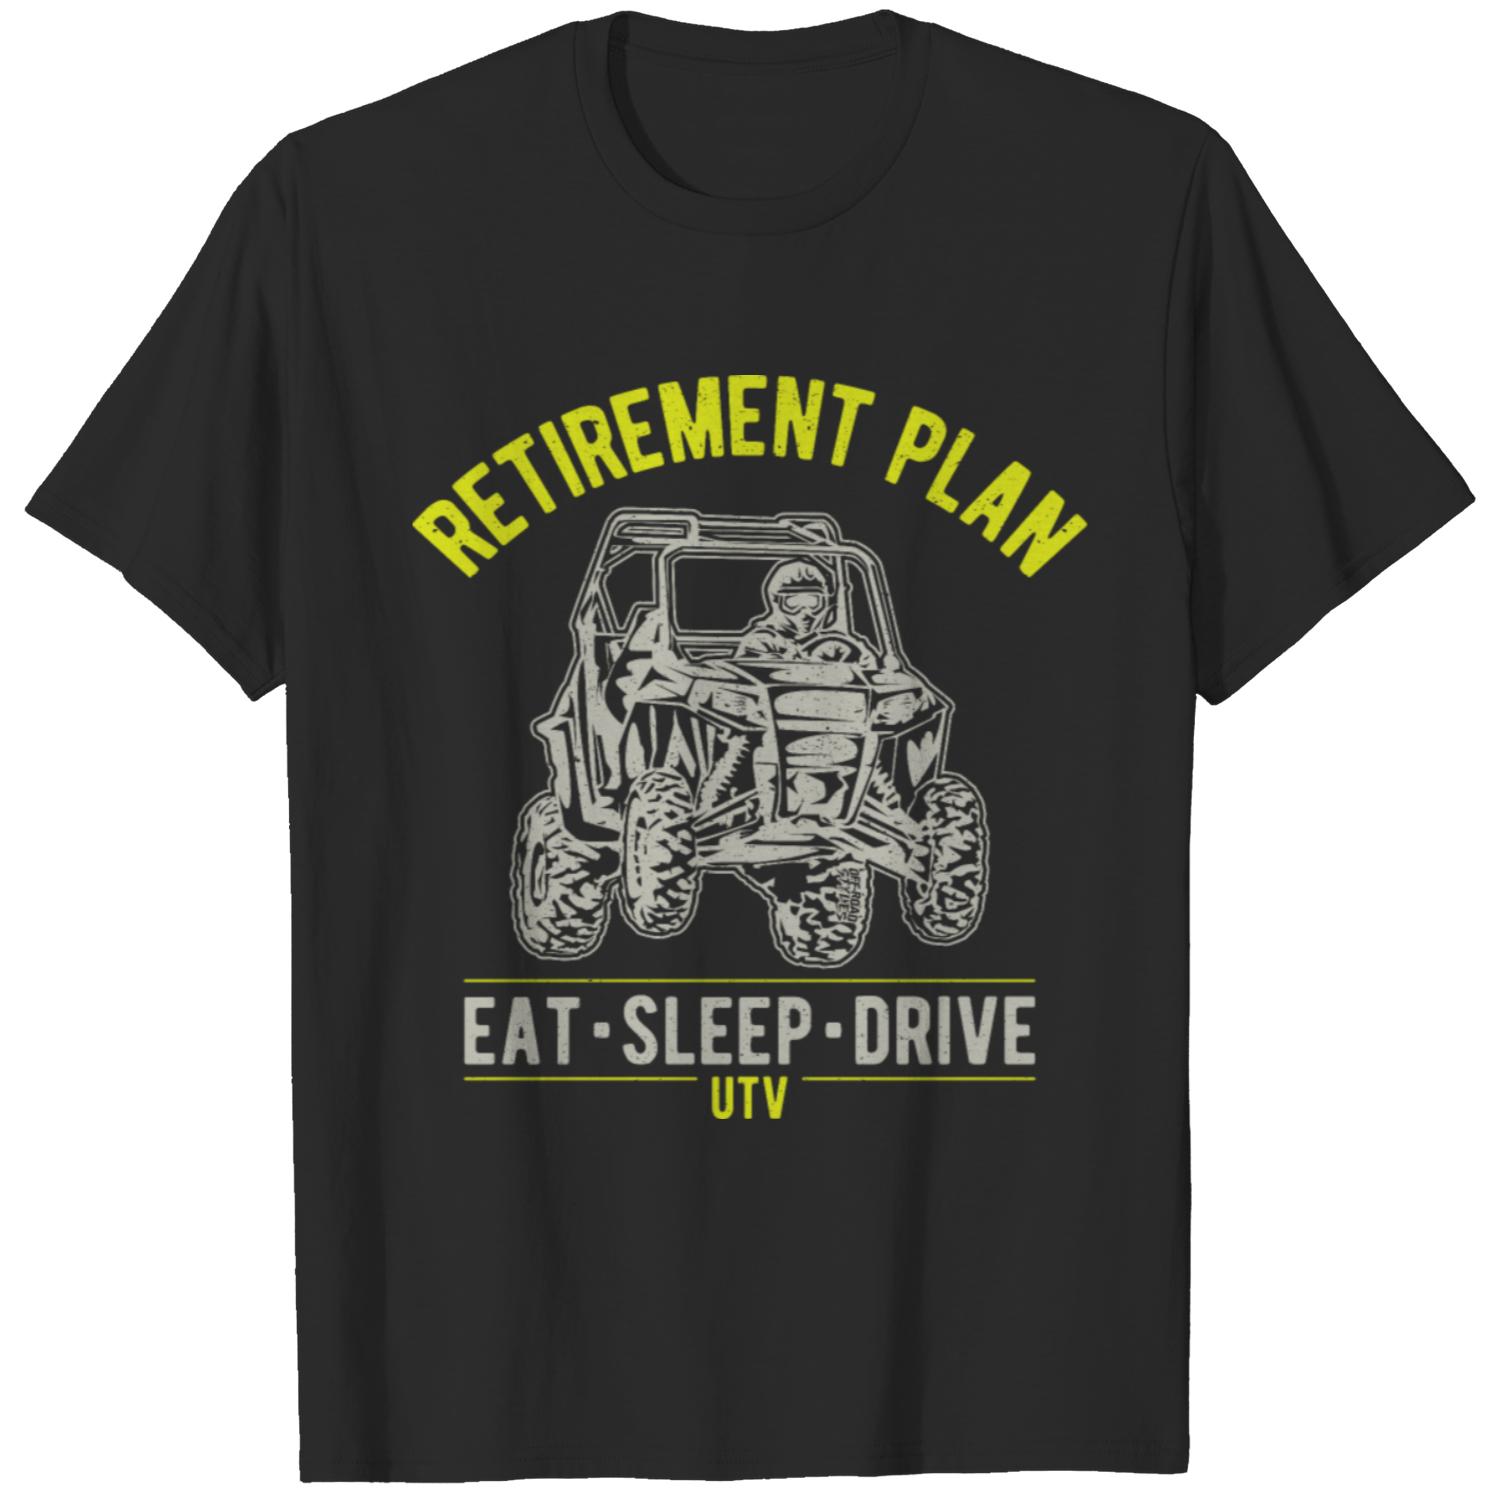 UTV SxS Retirement Plan T-shirt